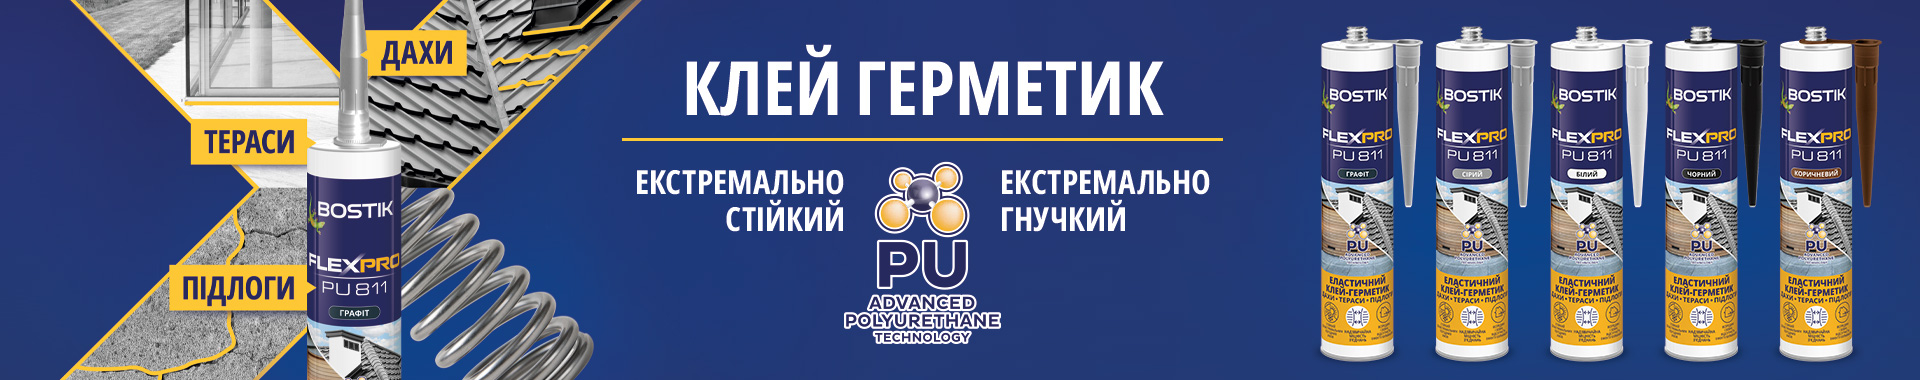 Bostik DIY Ukraine Flexpro banner image